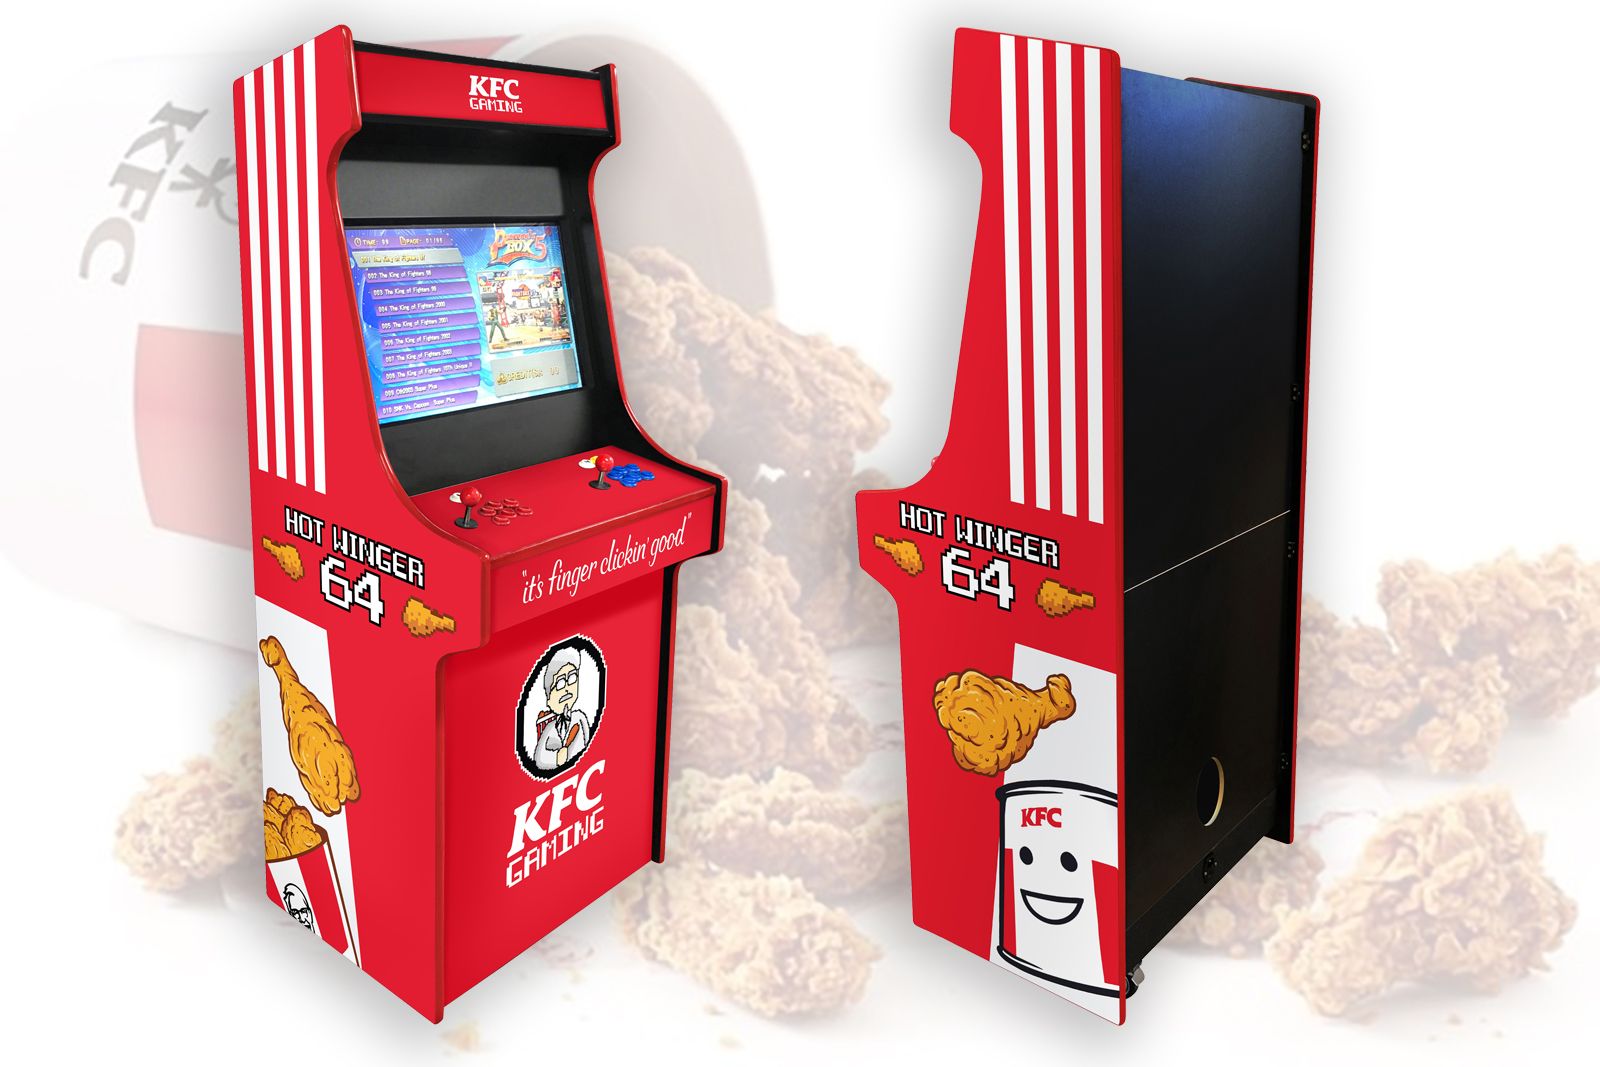 KFC follows up KFConsole with Hot Winger 64 retro arcade machine photo 1